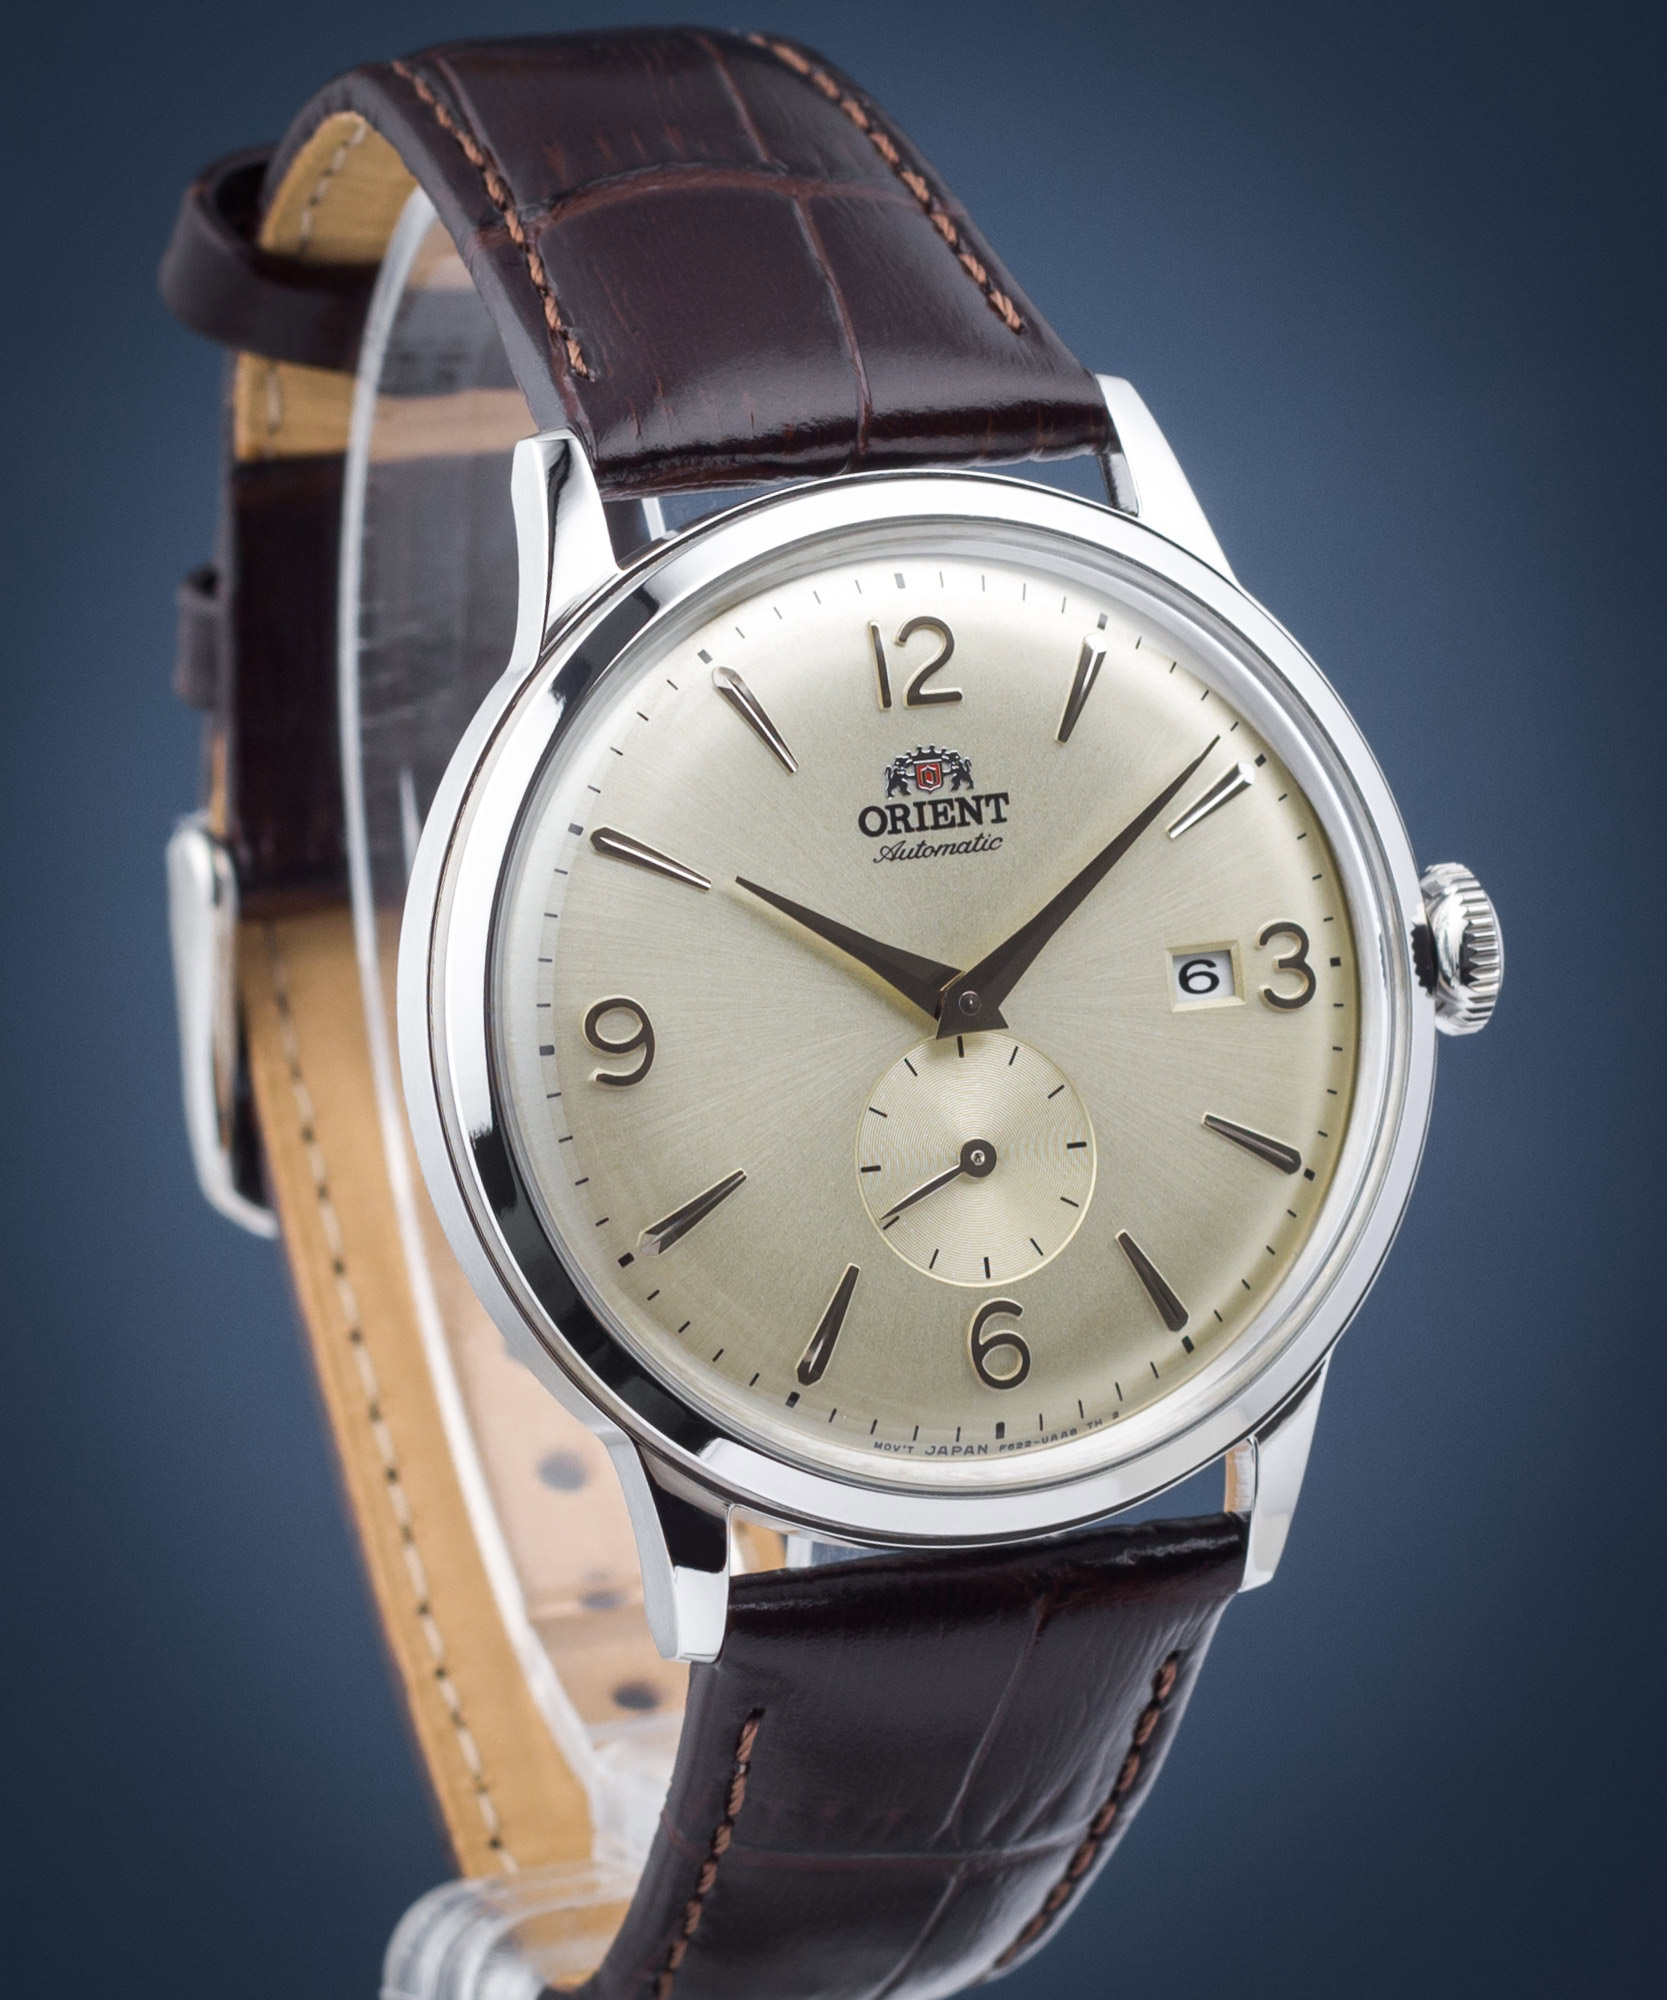 Orient Bambino: A Smaller Watch Making A Big Impact